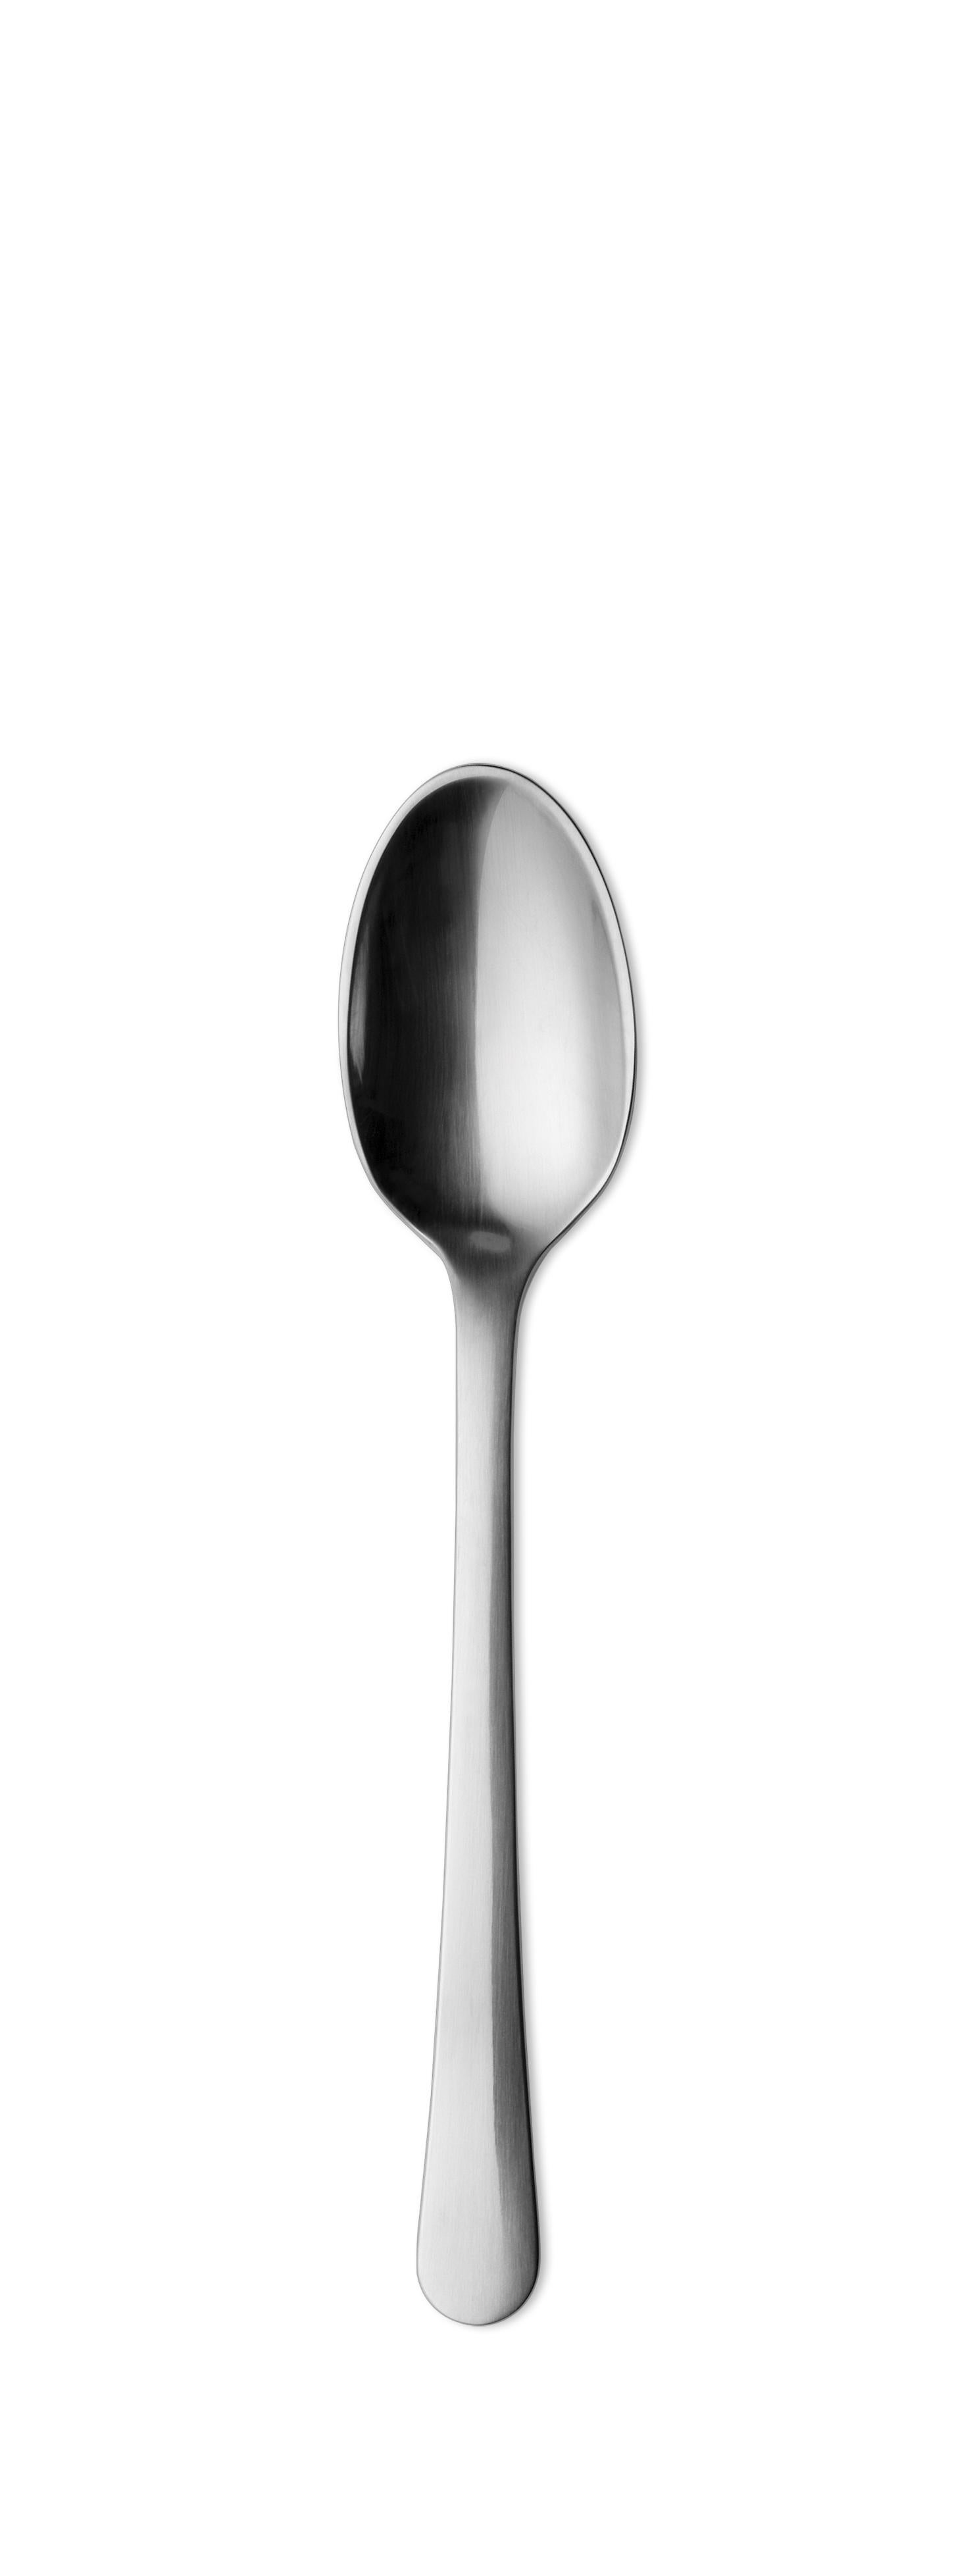 Chinese Georg Jensen Copenhagen Dinner Spoon in Stainless Steel by Grethe Meyer